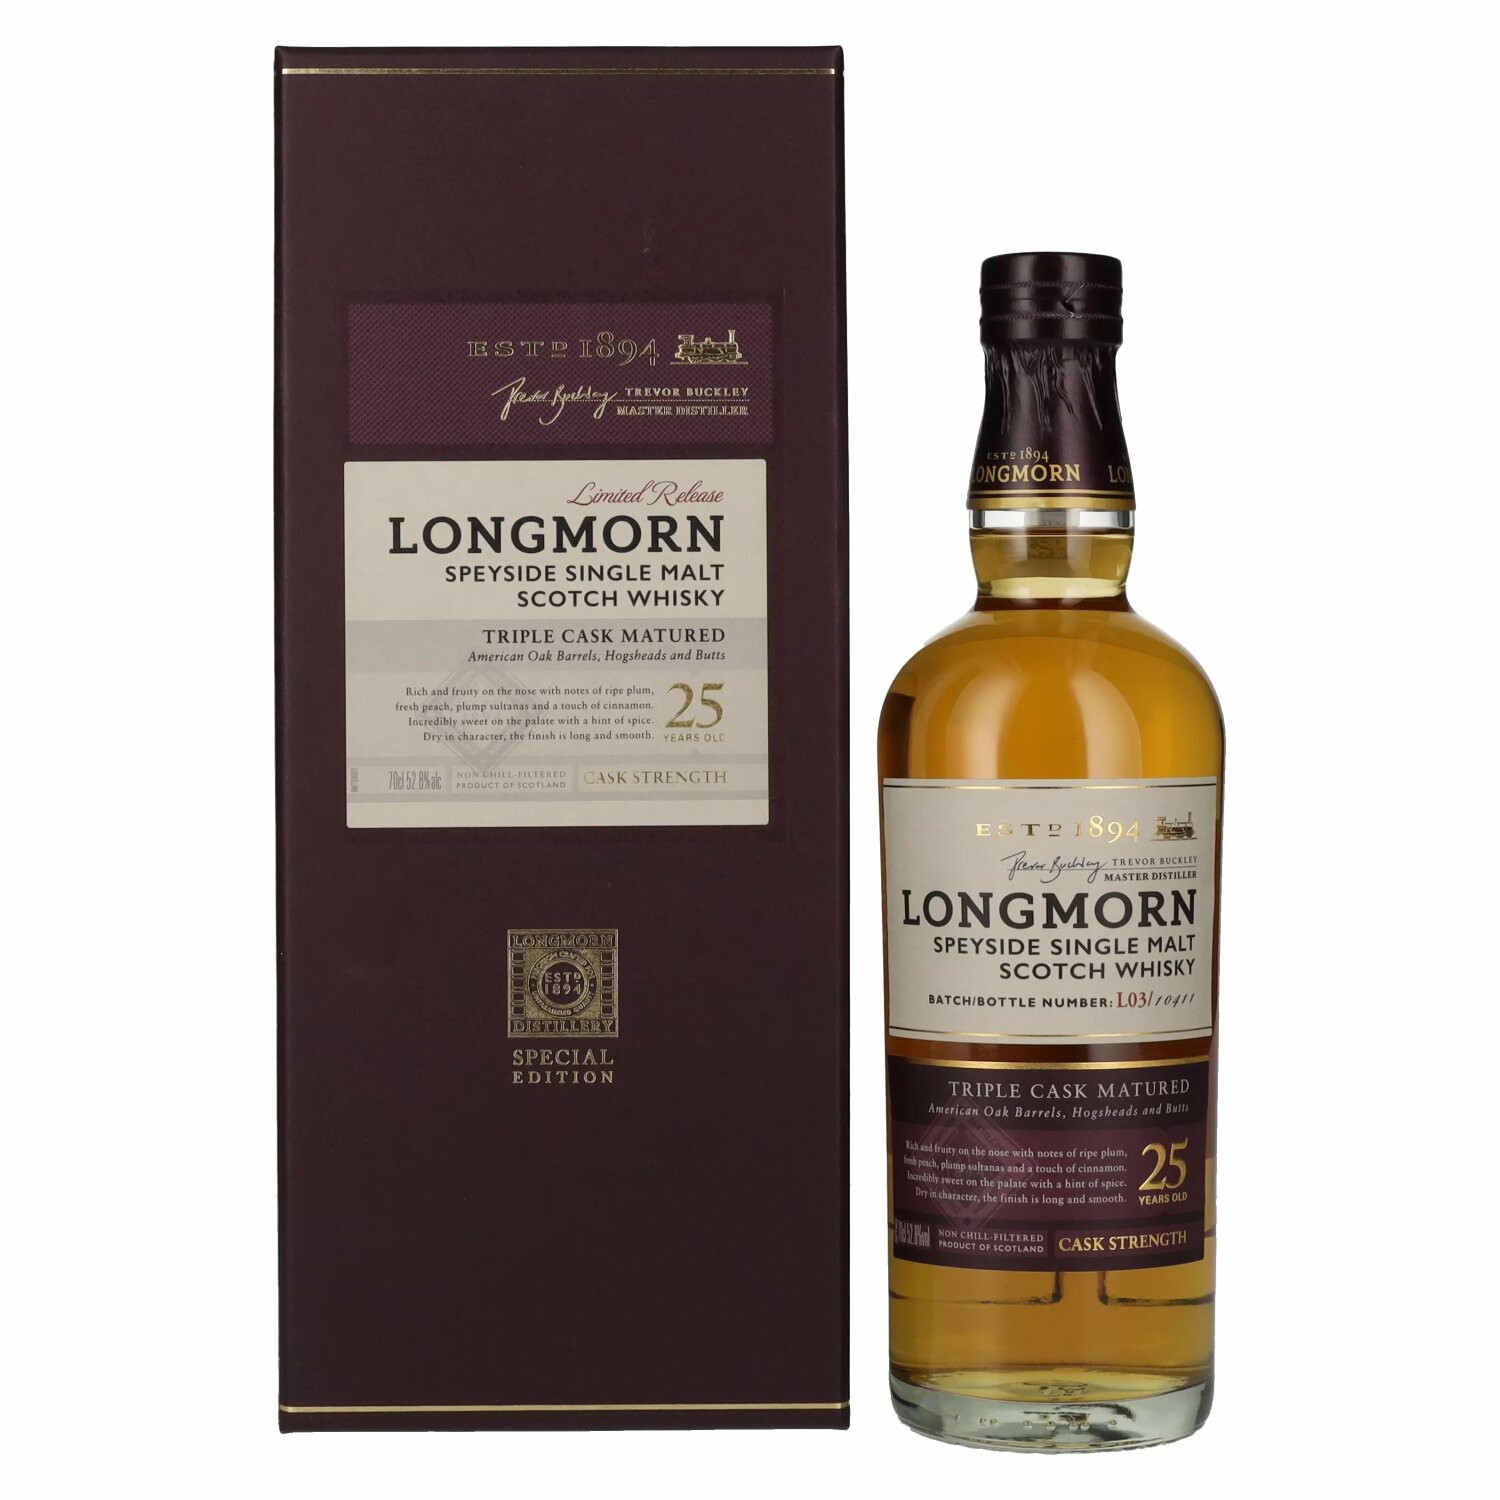 Longmorn 25 Years Old Speyside Single Malt Scotch Whisky 52,8% Vol. 0,7l in Giftbox